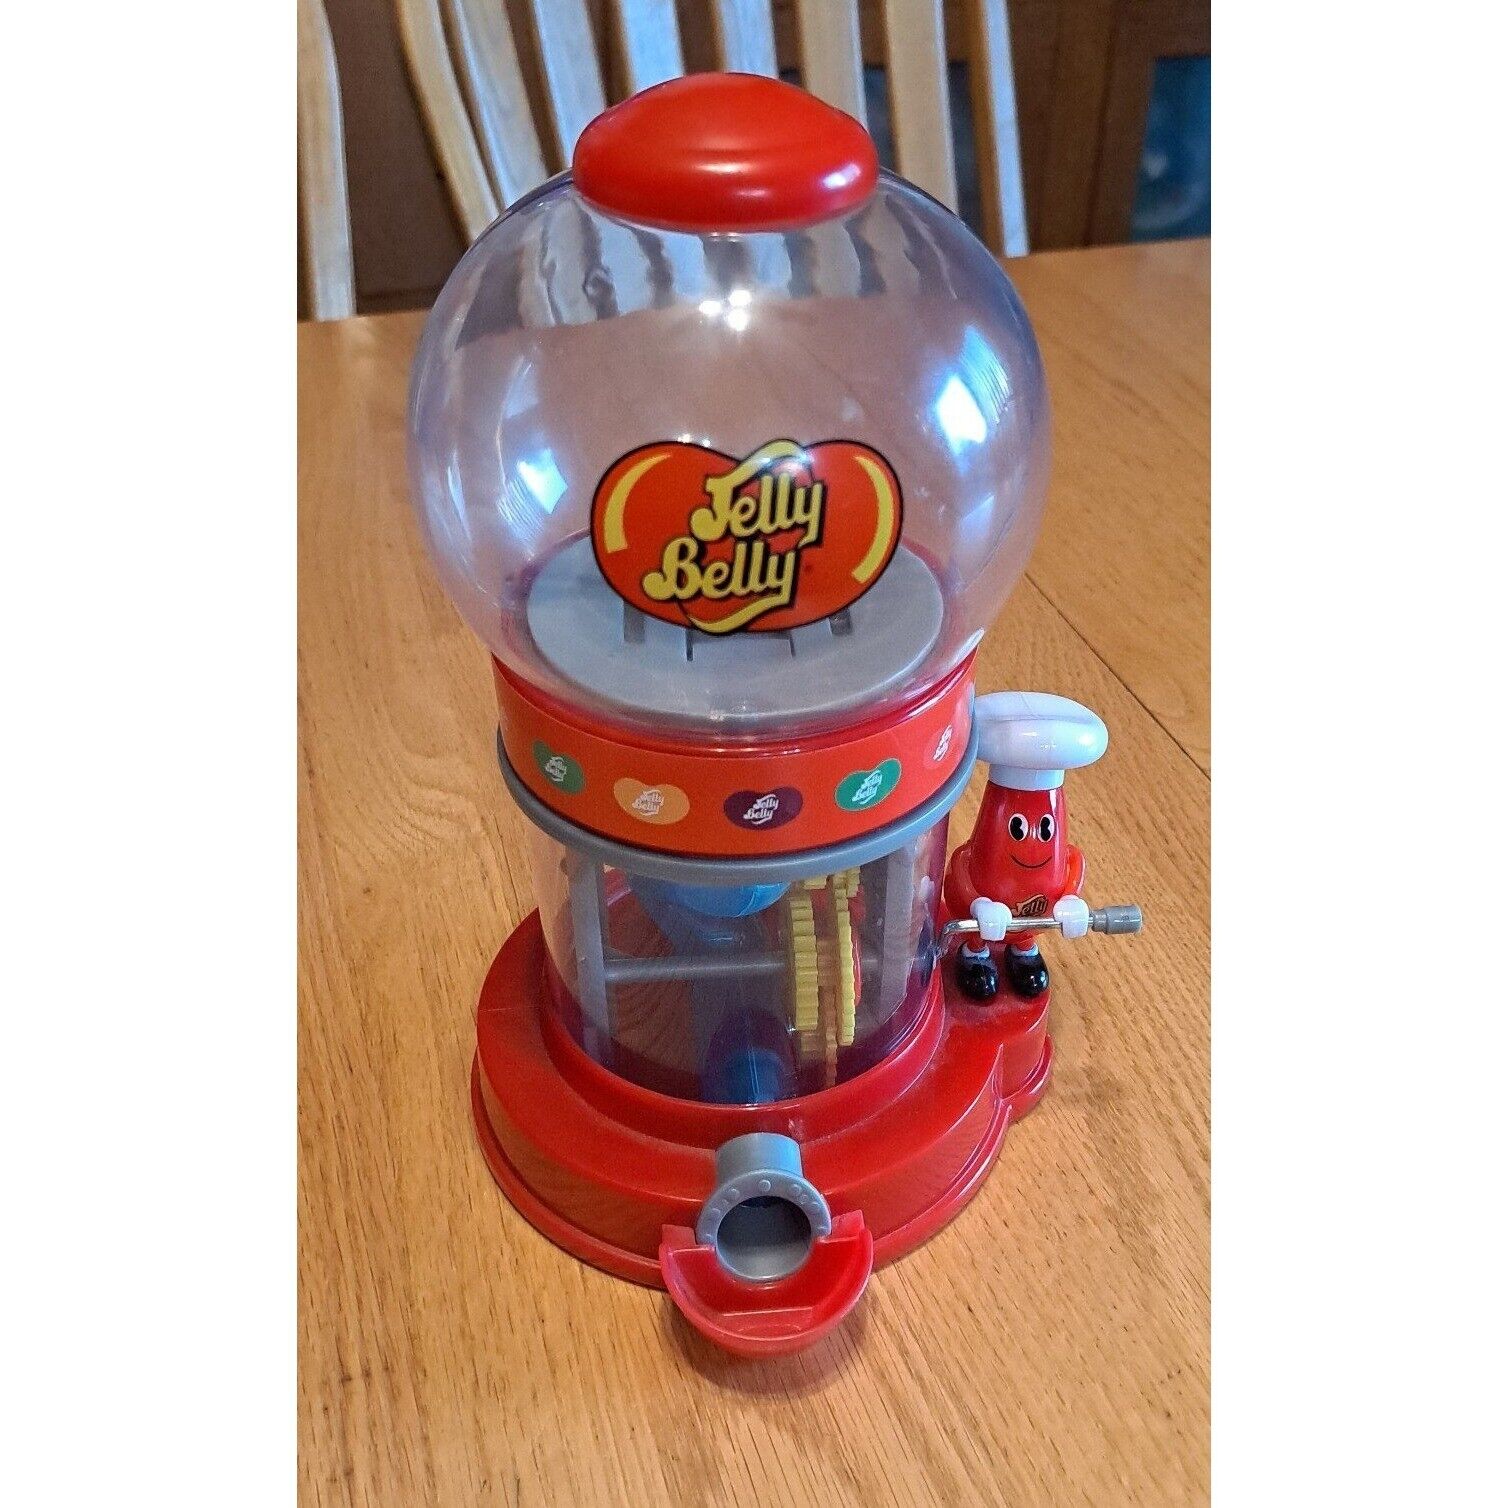 Jelly belly gum ball machine 2012